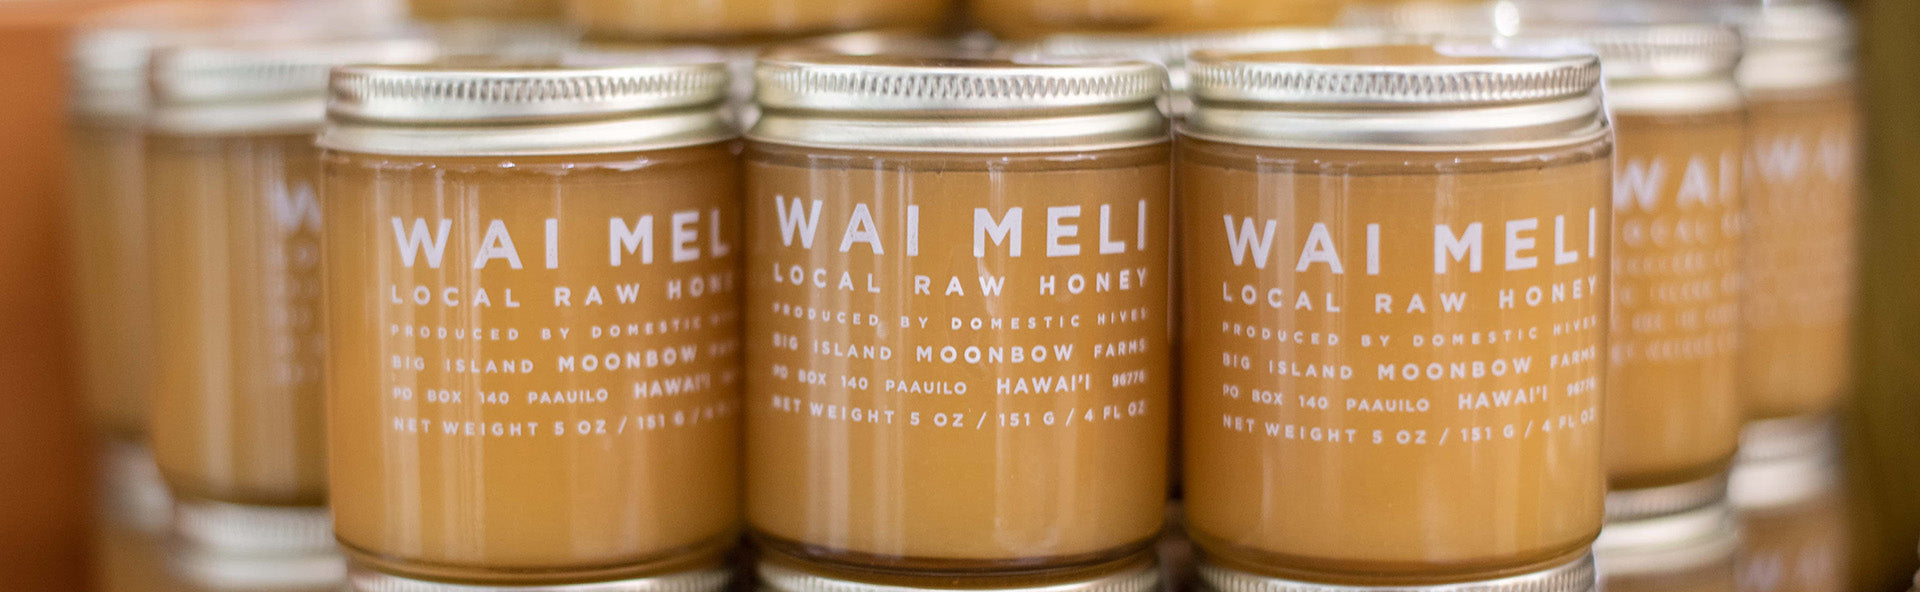 Jars of Wai Meli Honey